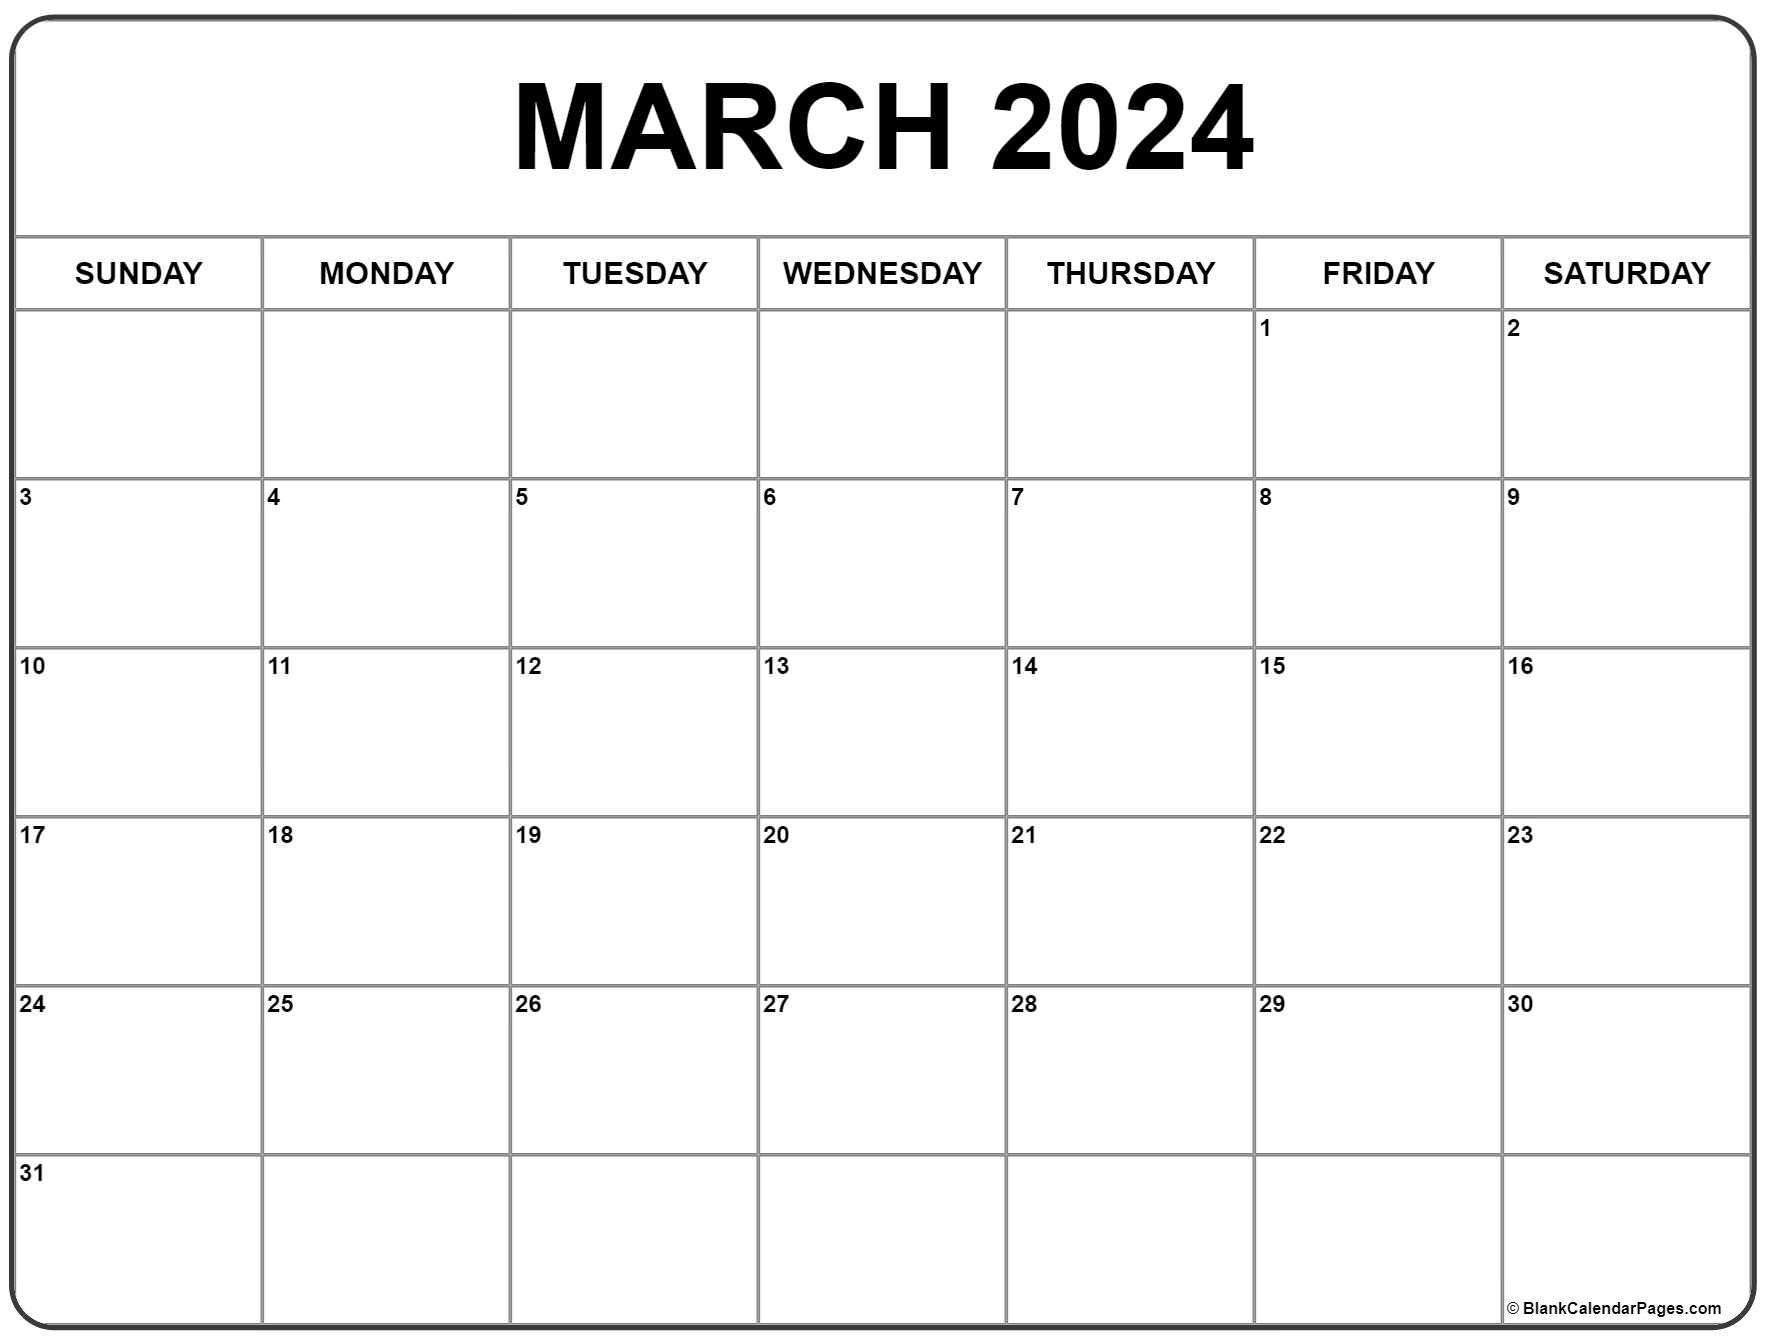 Monthly Calendar 2022 March March 2022 Calendar | Free Printable Calendar Templates